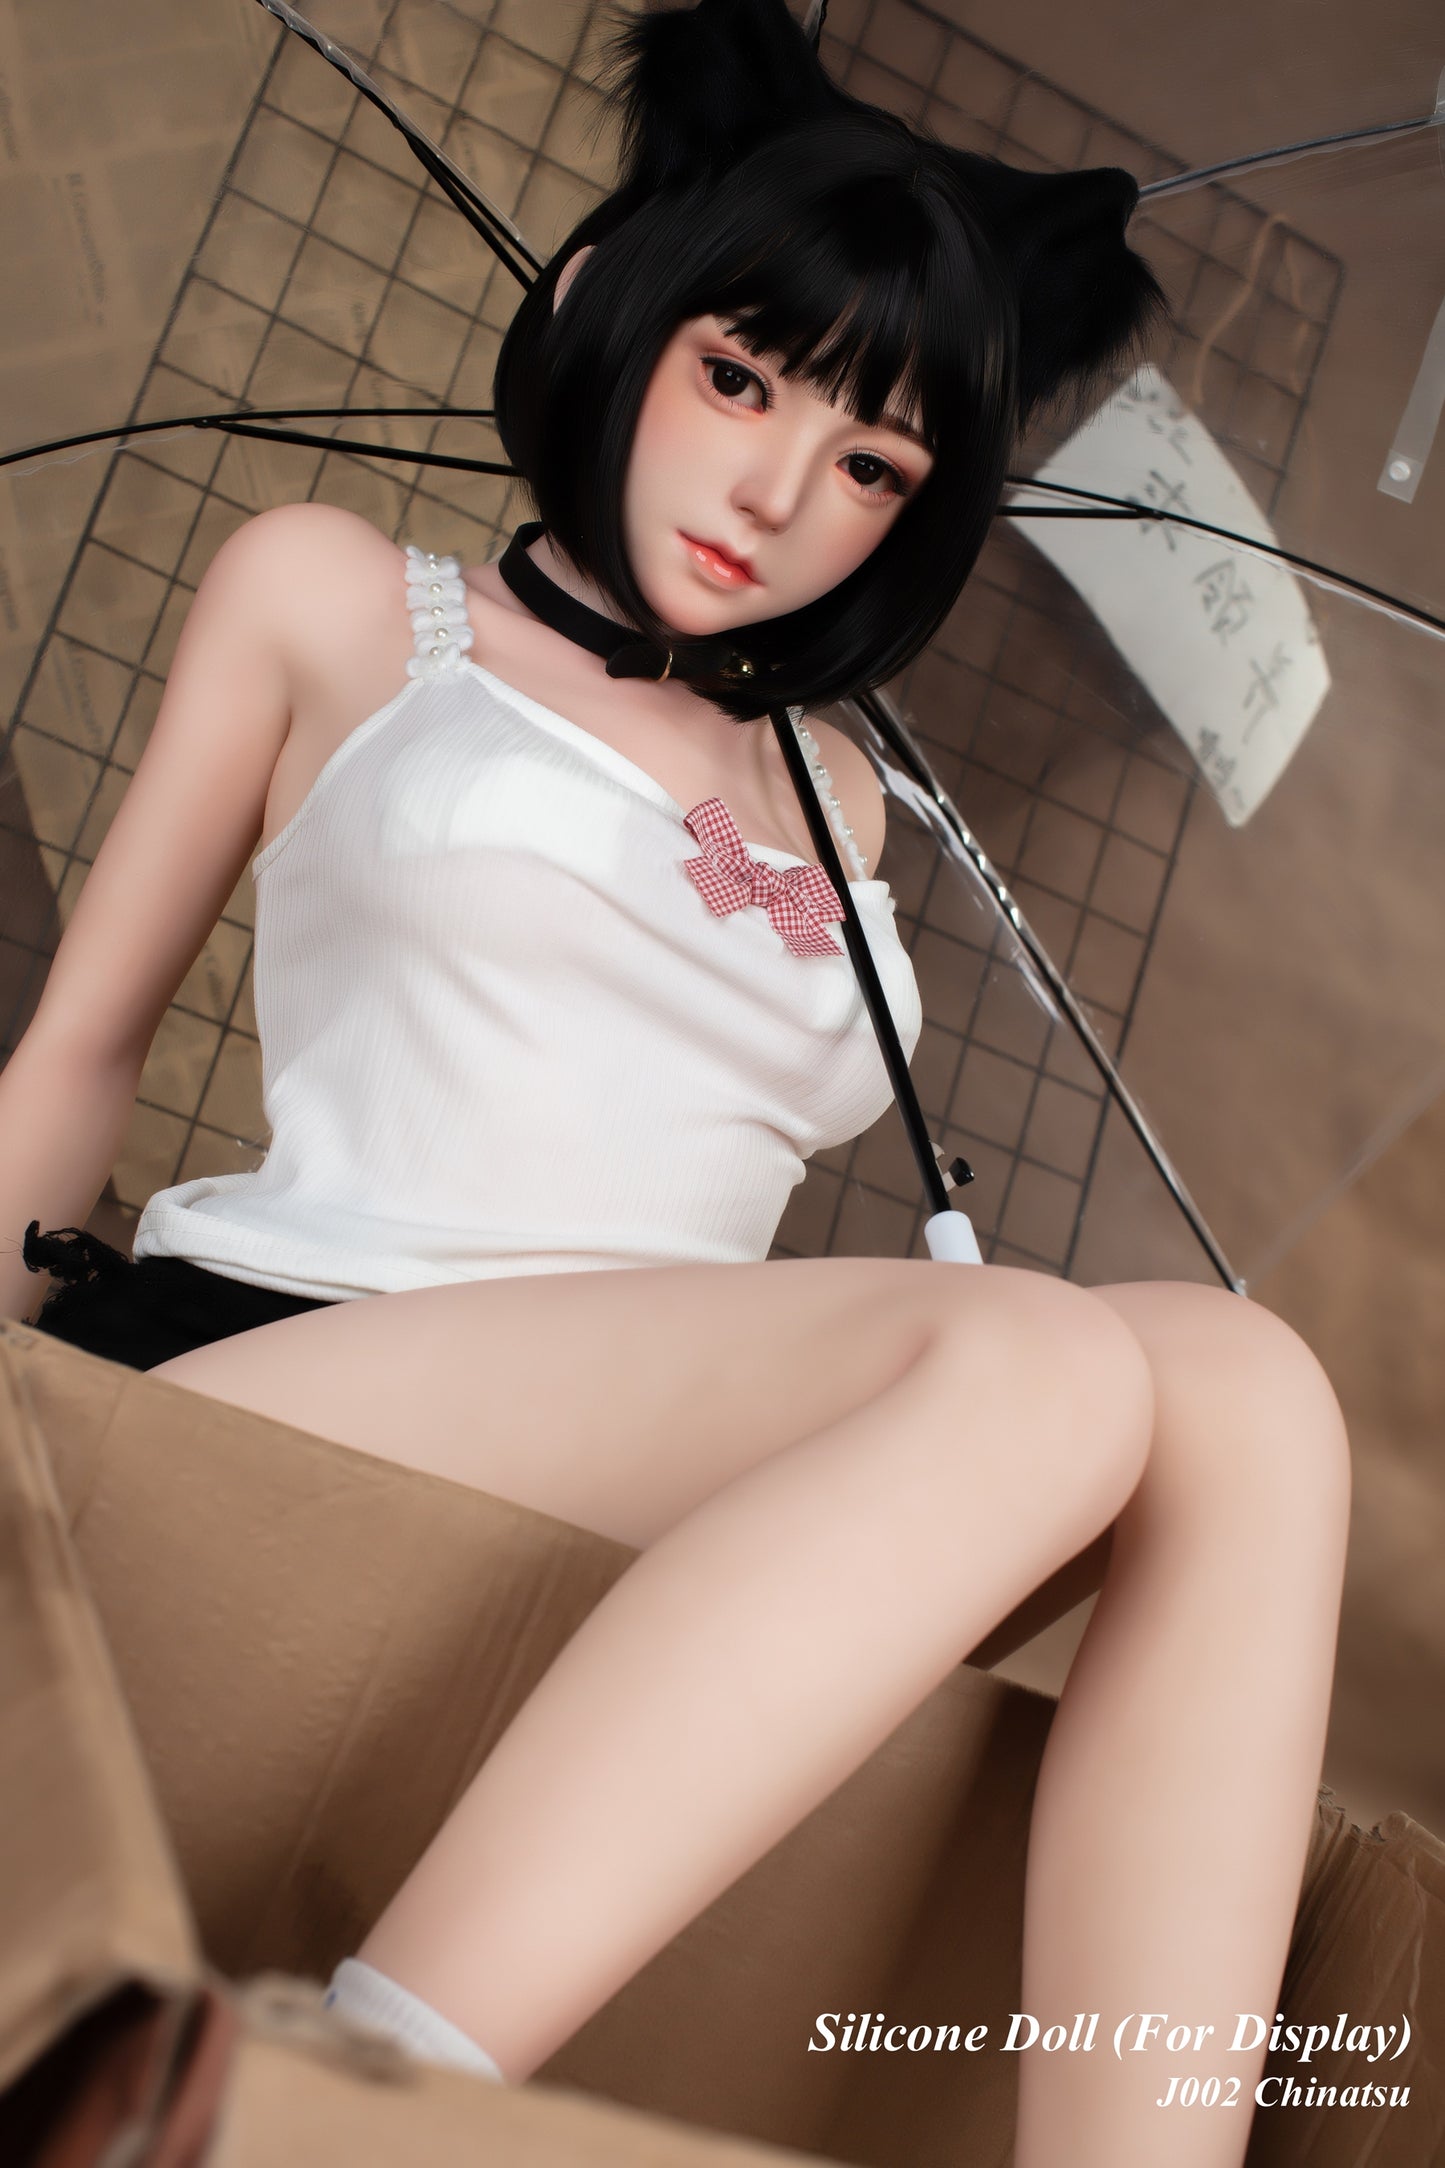 FU DOLL Full Silicone Doll Life-like Fashion Display Mannequins For Display [ J002 Chinatsu ]